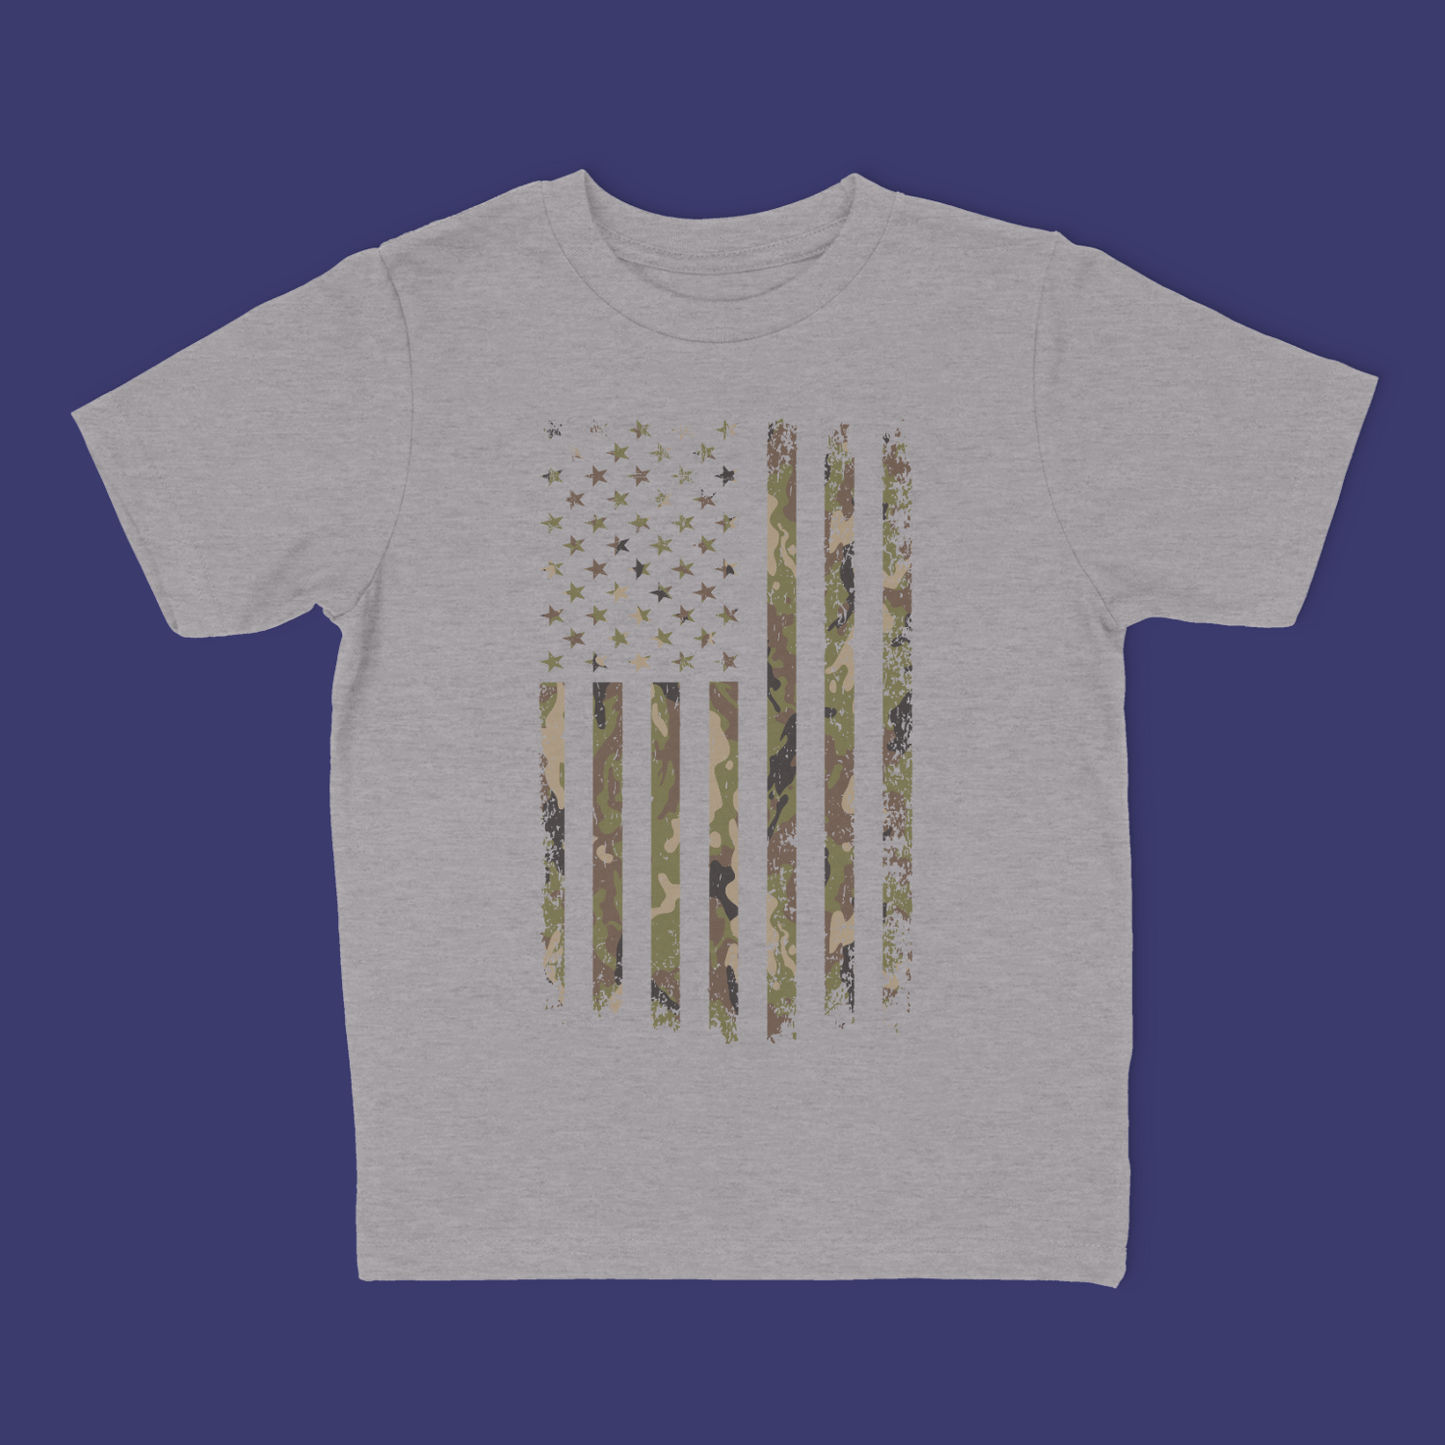 Kids' Rugged Patriot T-Shirt